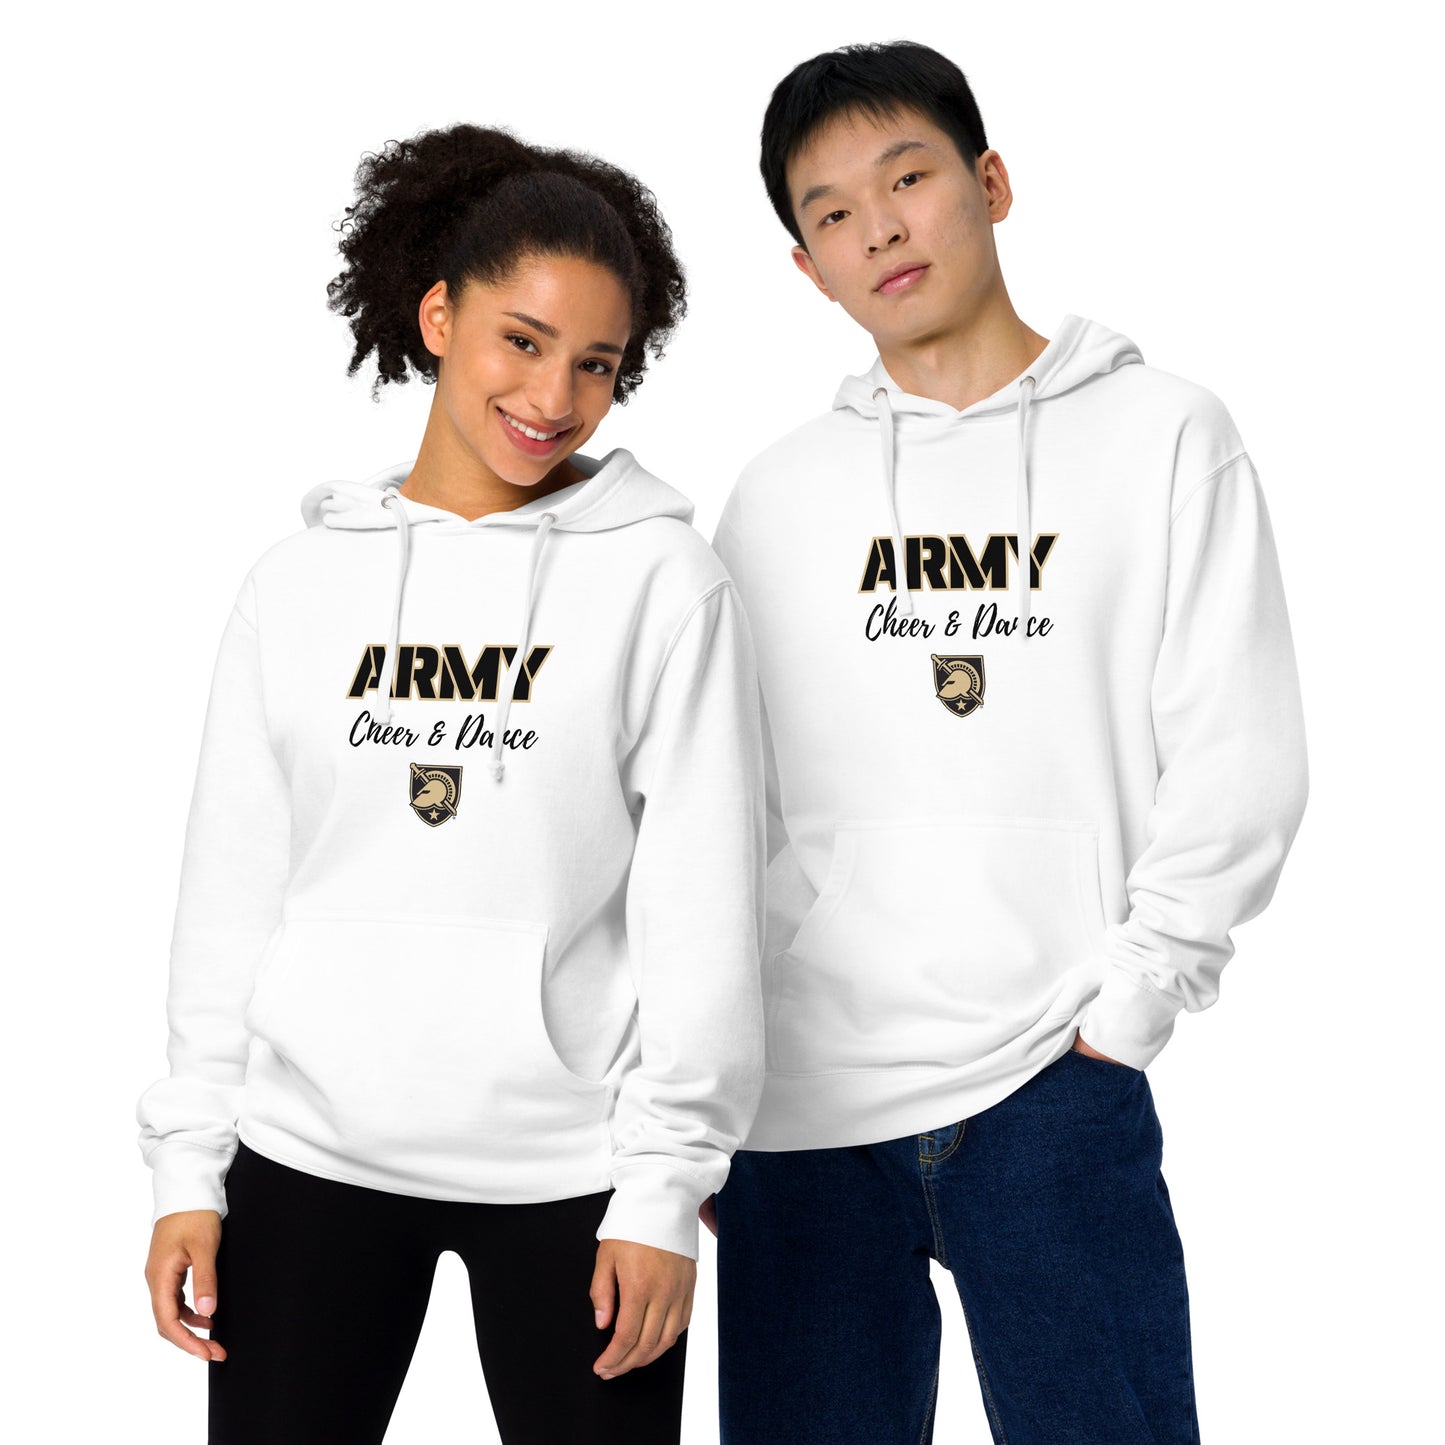 Army Cheer & Dance Unisex midweight hoodie